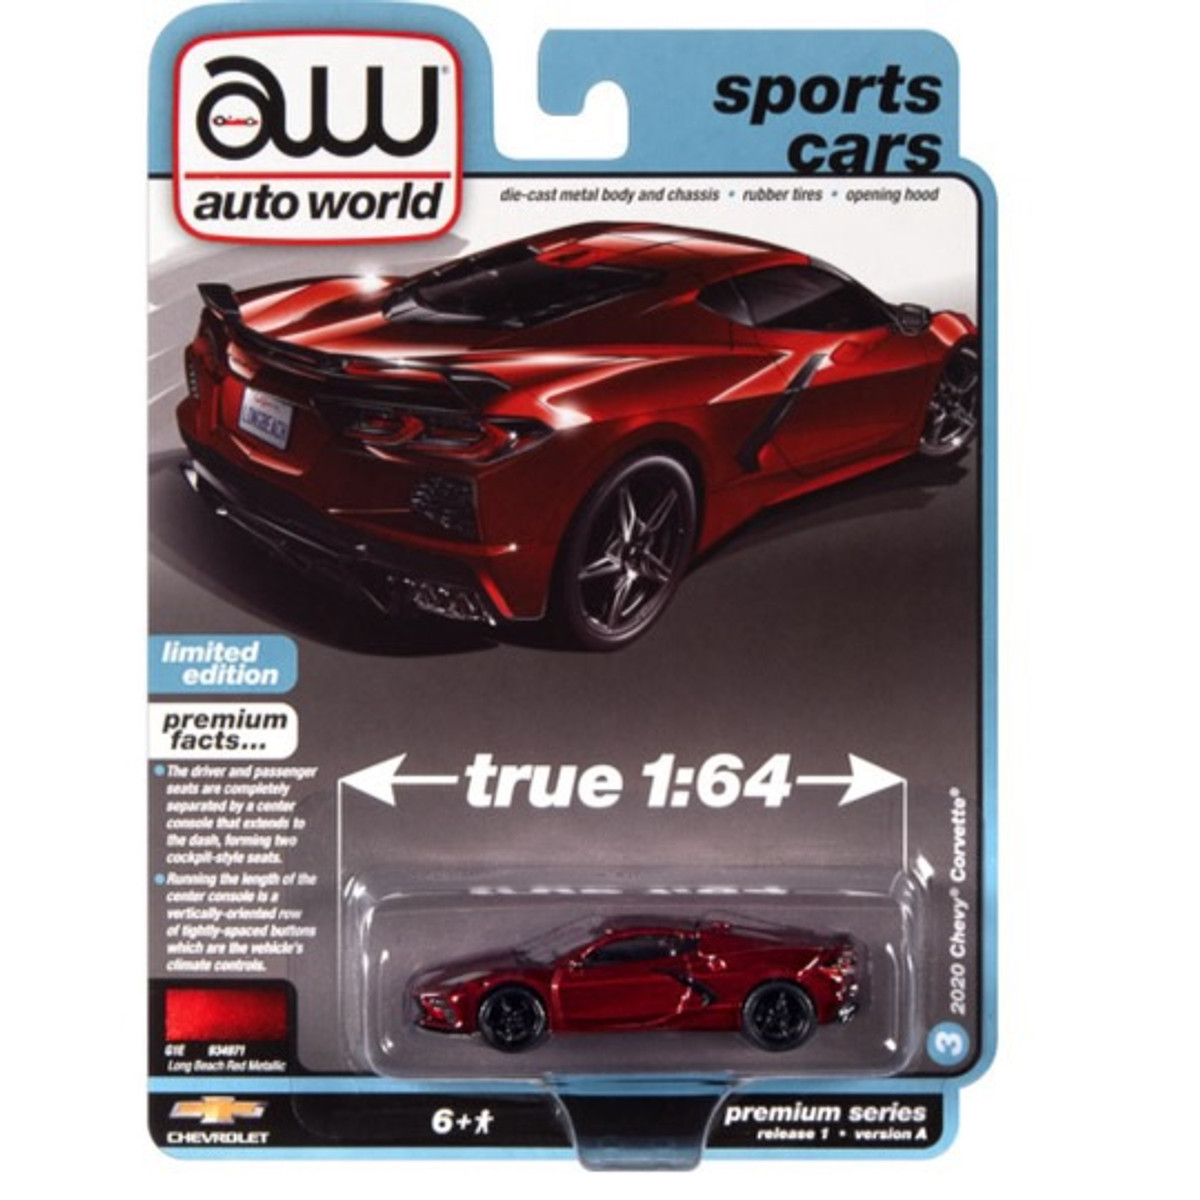 2023 Auto world Sports Cars 2020 Chevy Corvette Release 1A 